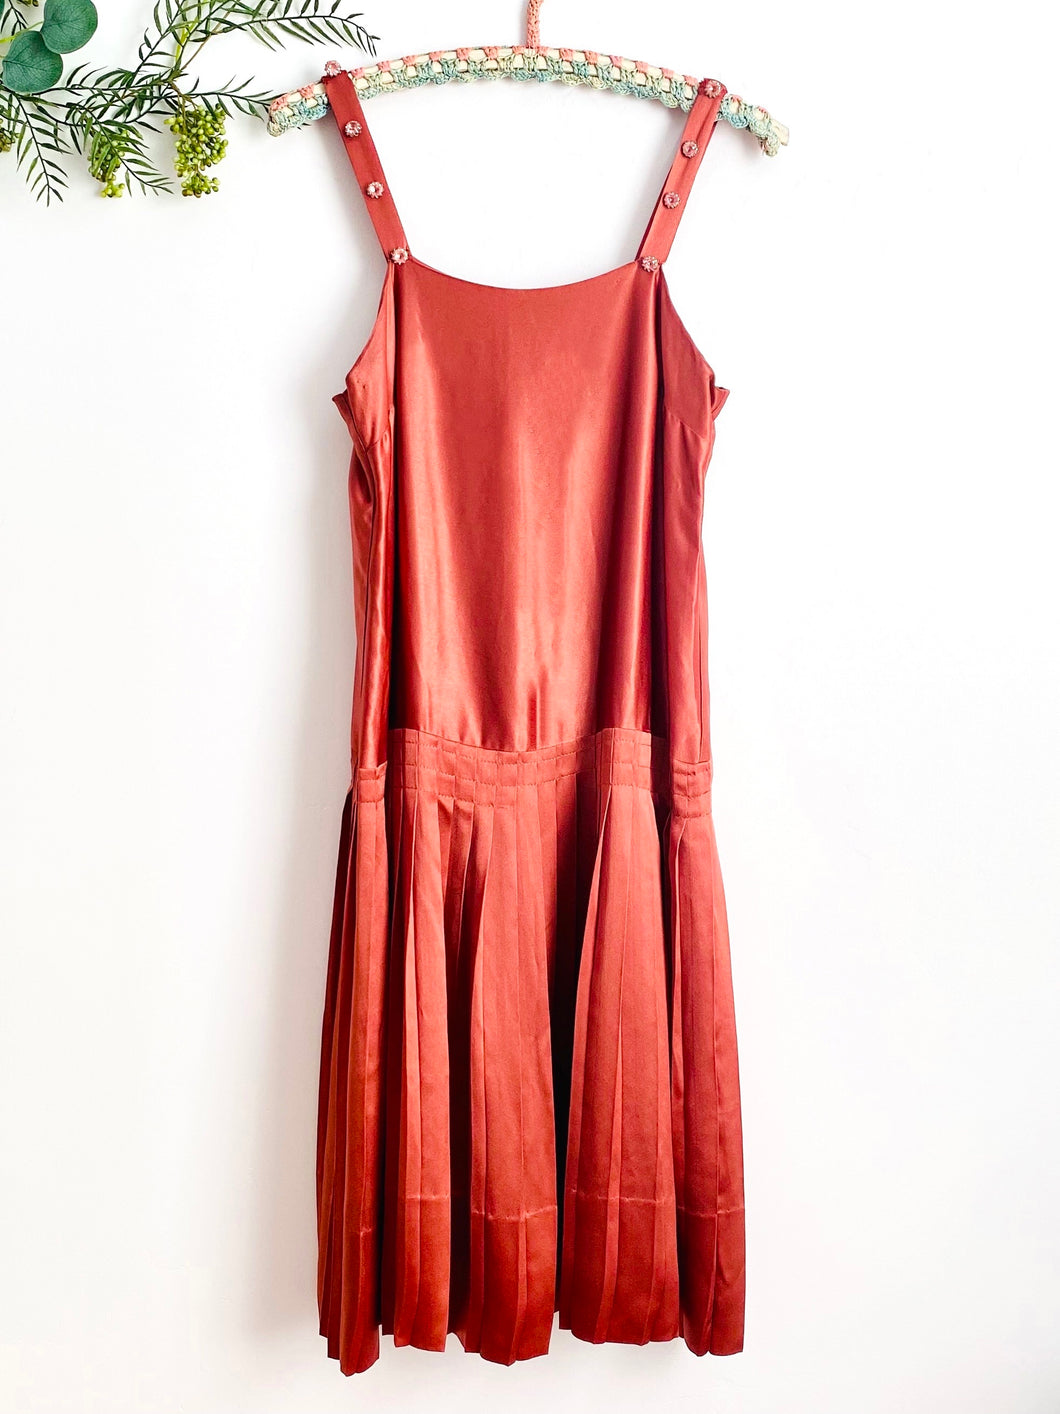 Vintage 1920s rust color silk satin pleated dress drop waist